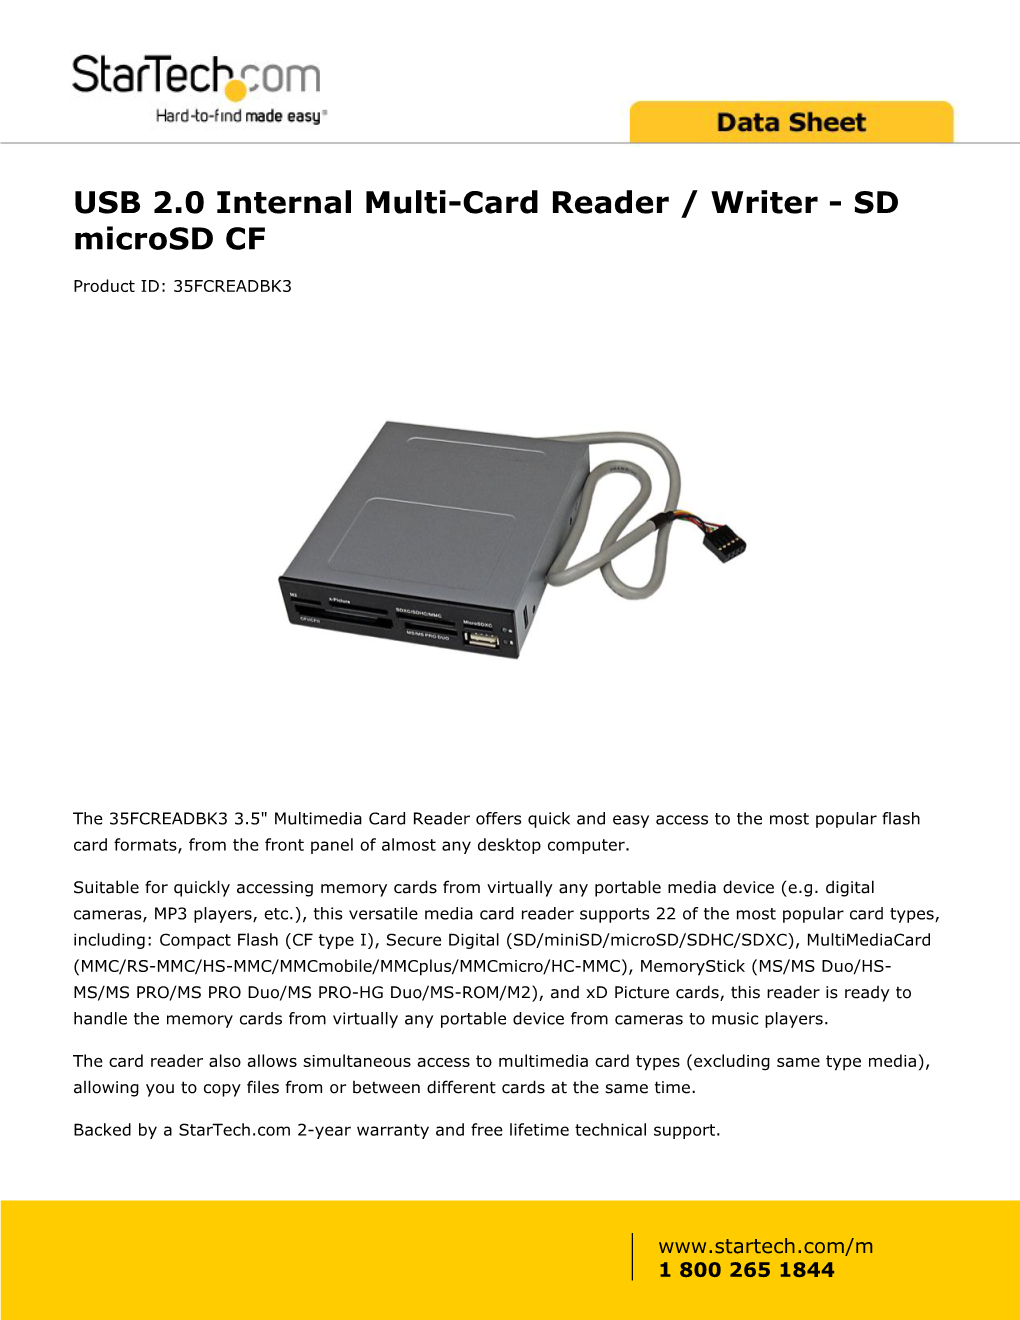 USB 2.0 Internal Multi-Card Reader / Writer - SD Microsd CF